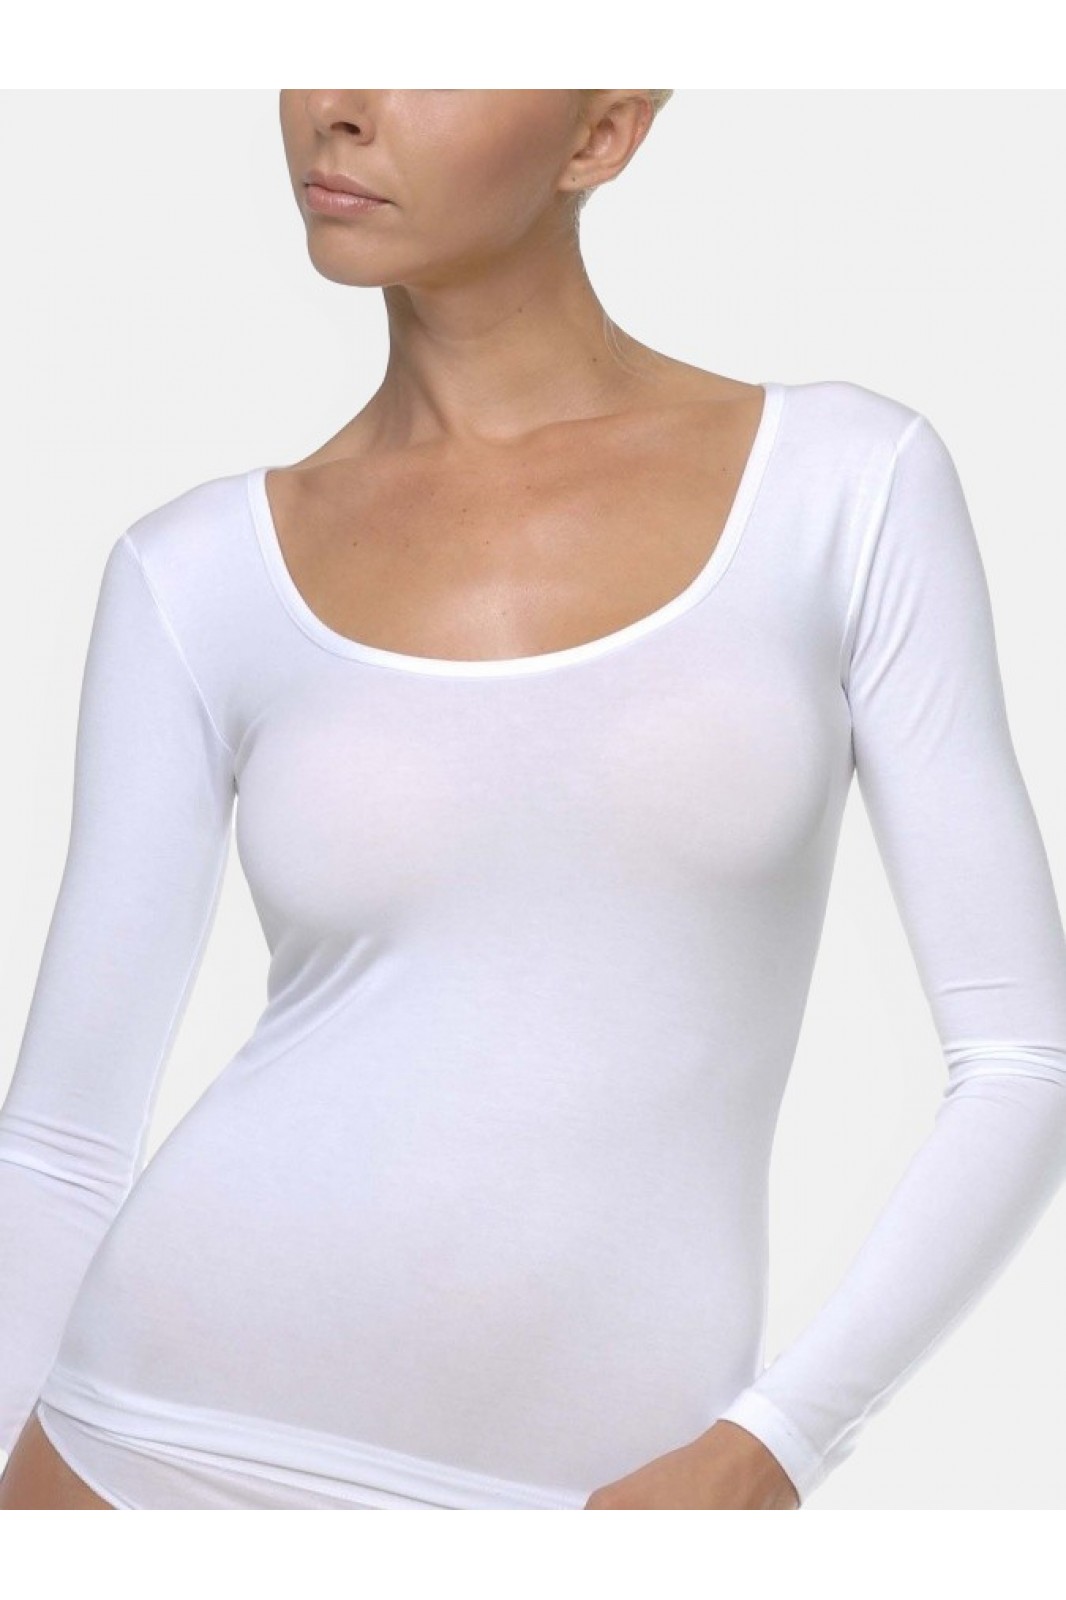 HELIOS Long sleeve Undershirt with open neckline - micromodal